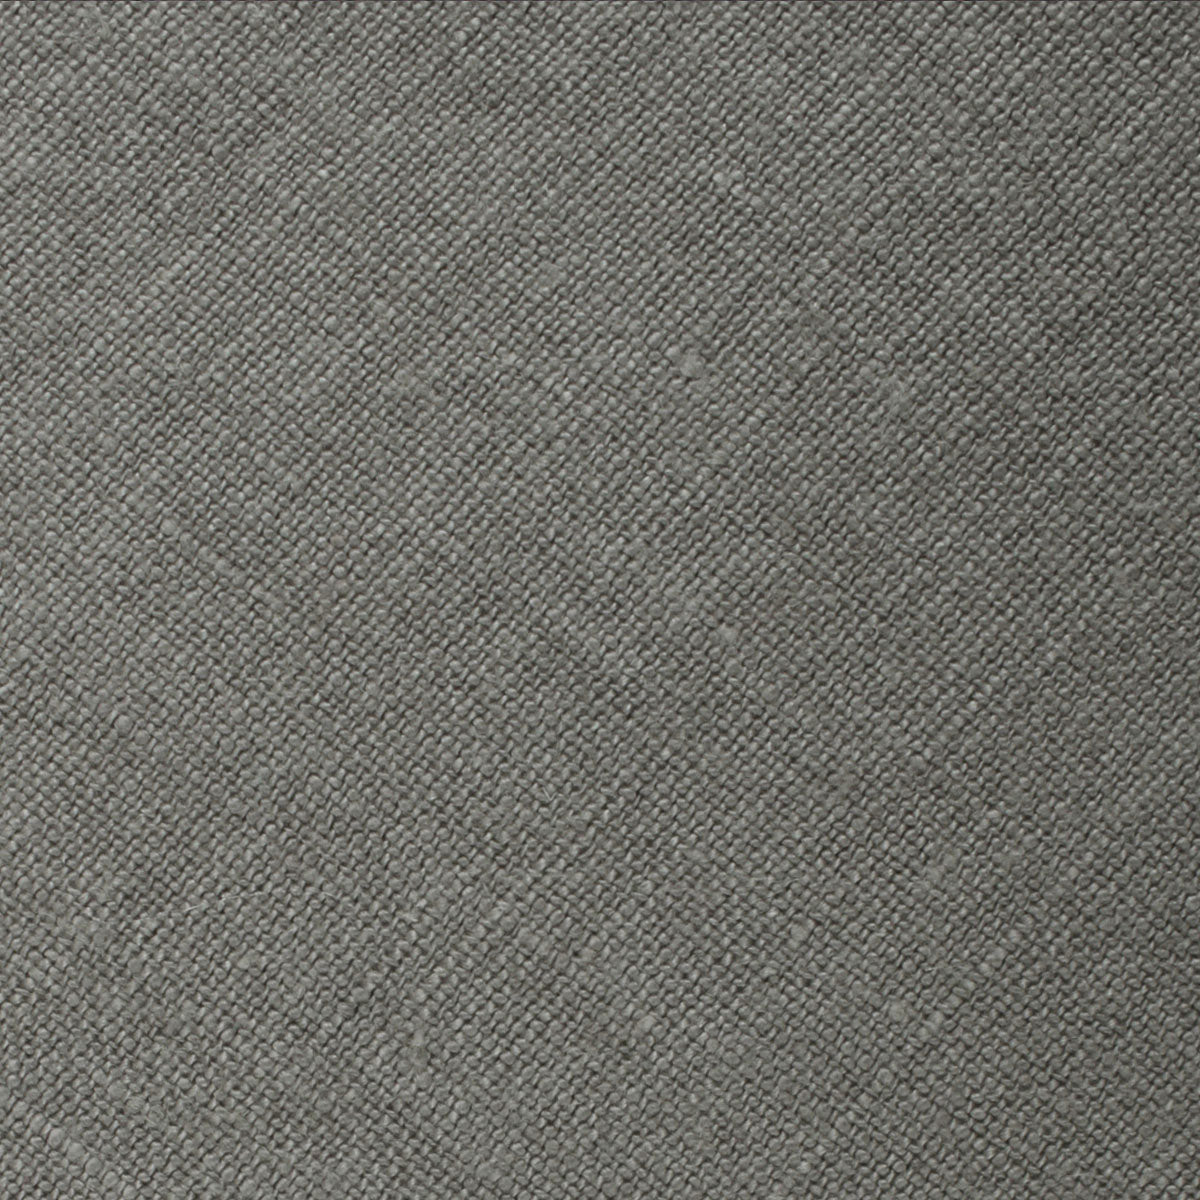 Mercury Charcoal Linen Bow Tie Fabric